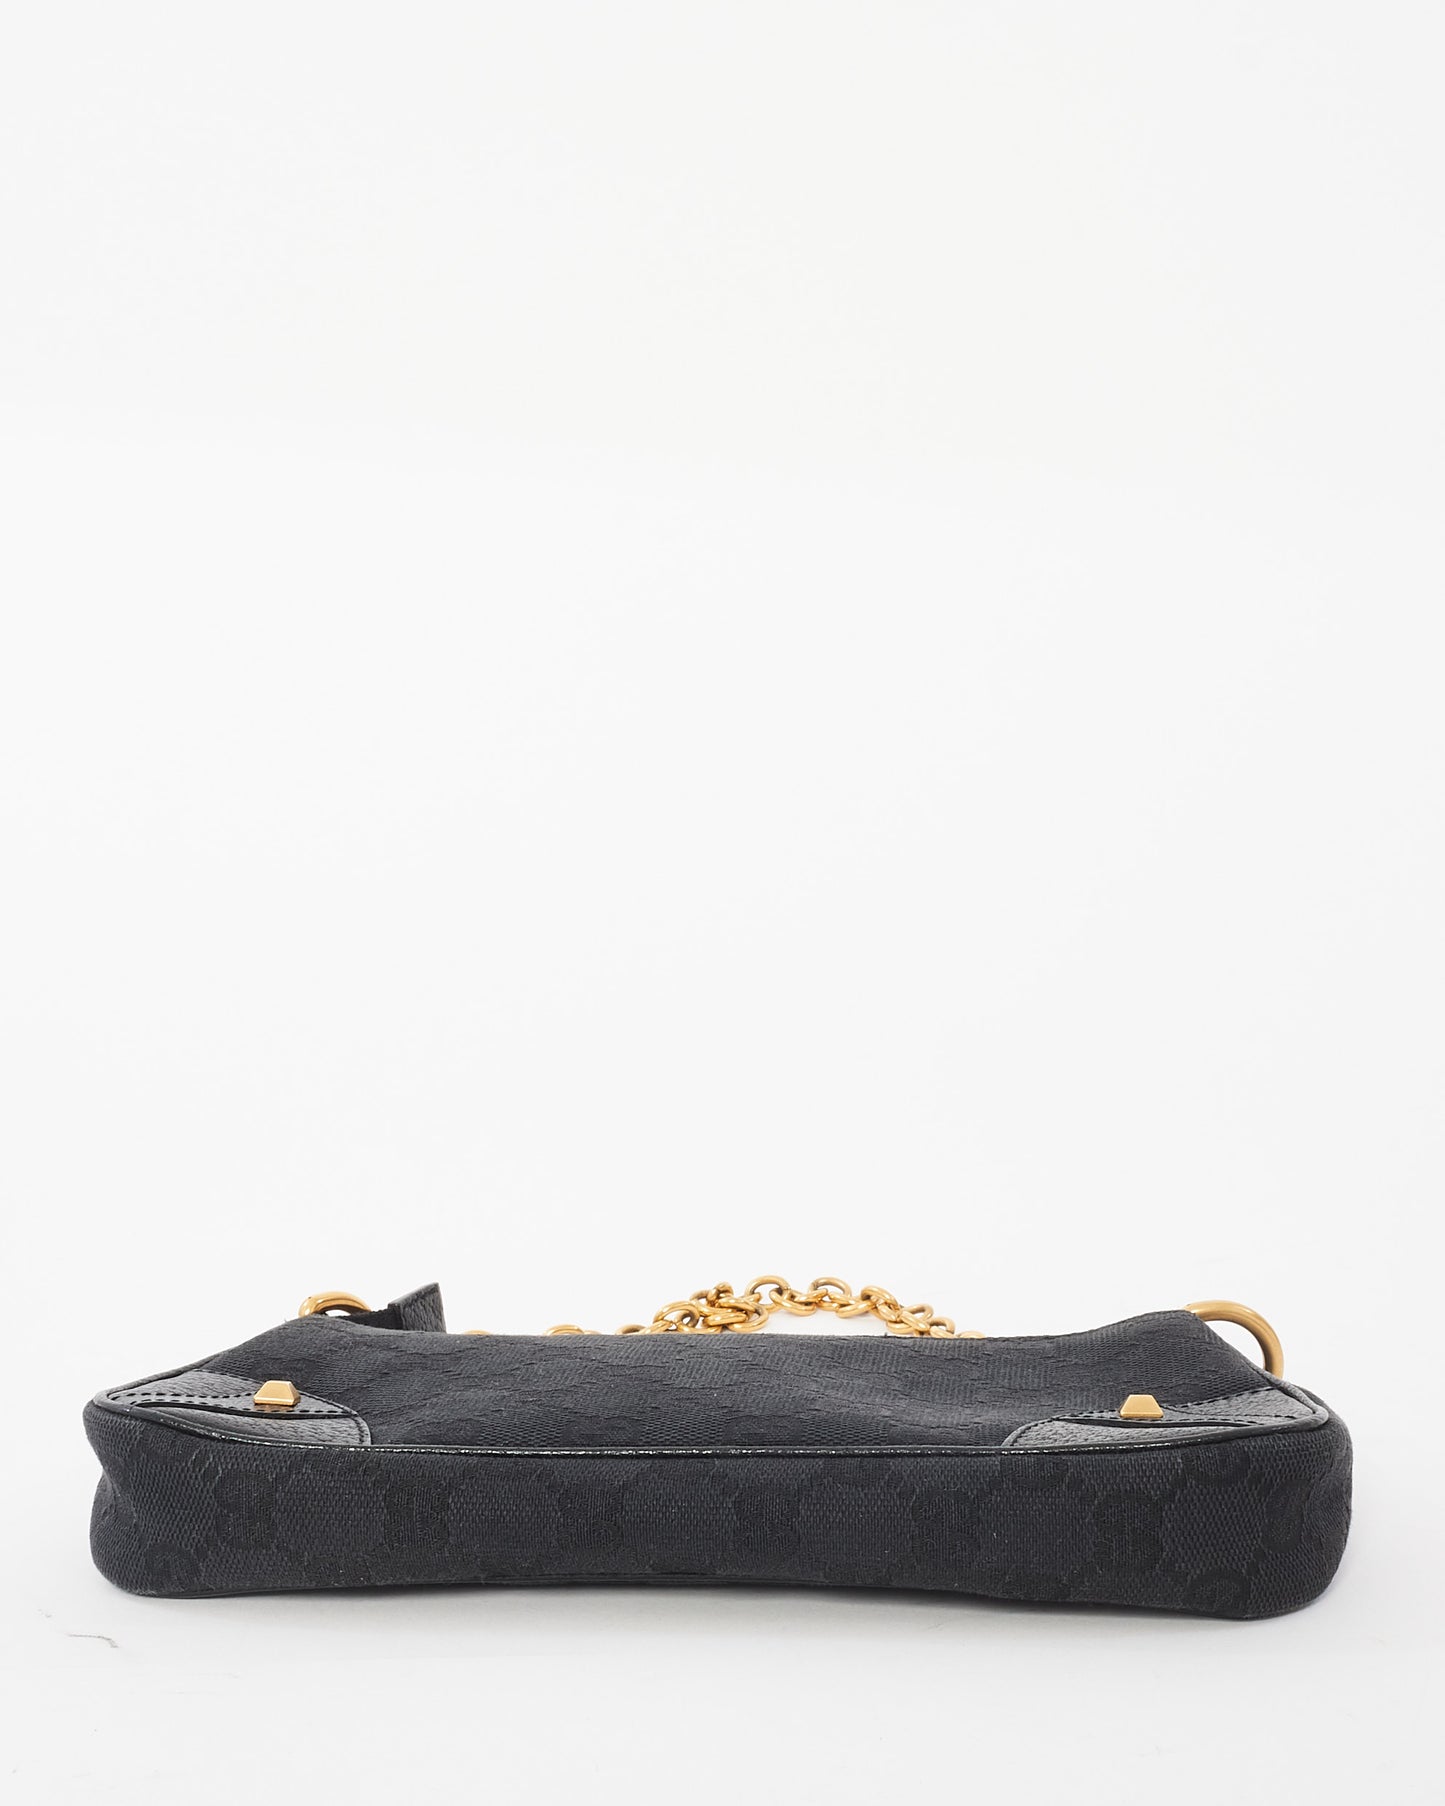 Gucci Black Canvas & Gold Chain Shoulder Bag